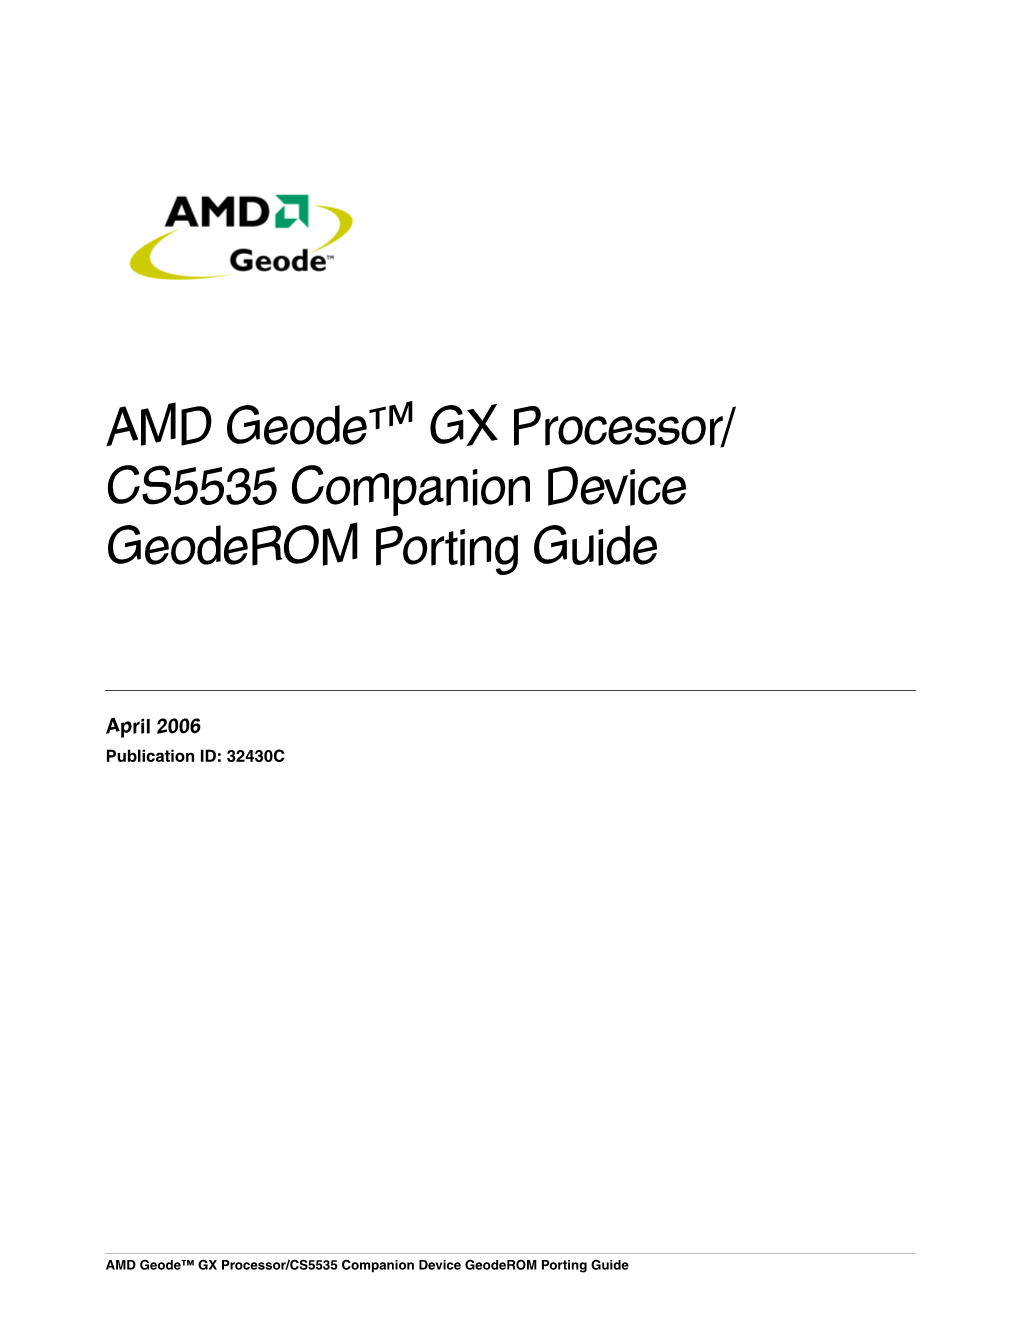 AMD Geode™ GX Processor/CS5535 Companion Device Geoderom Porting Guide © 2006 Advanced Micro Devices, Inc